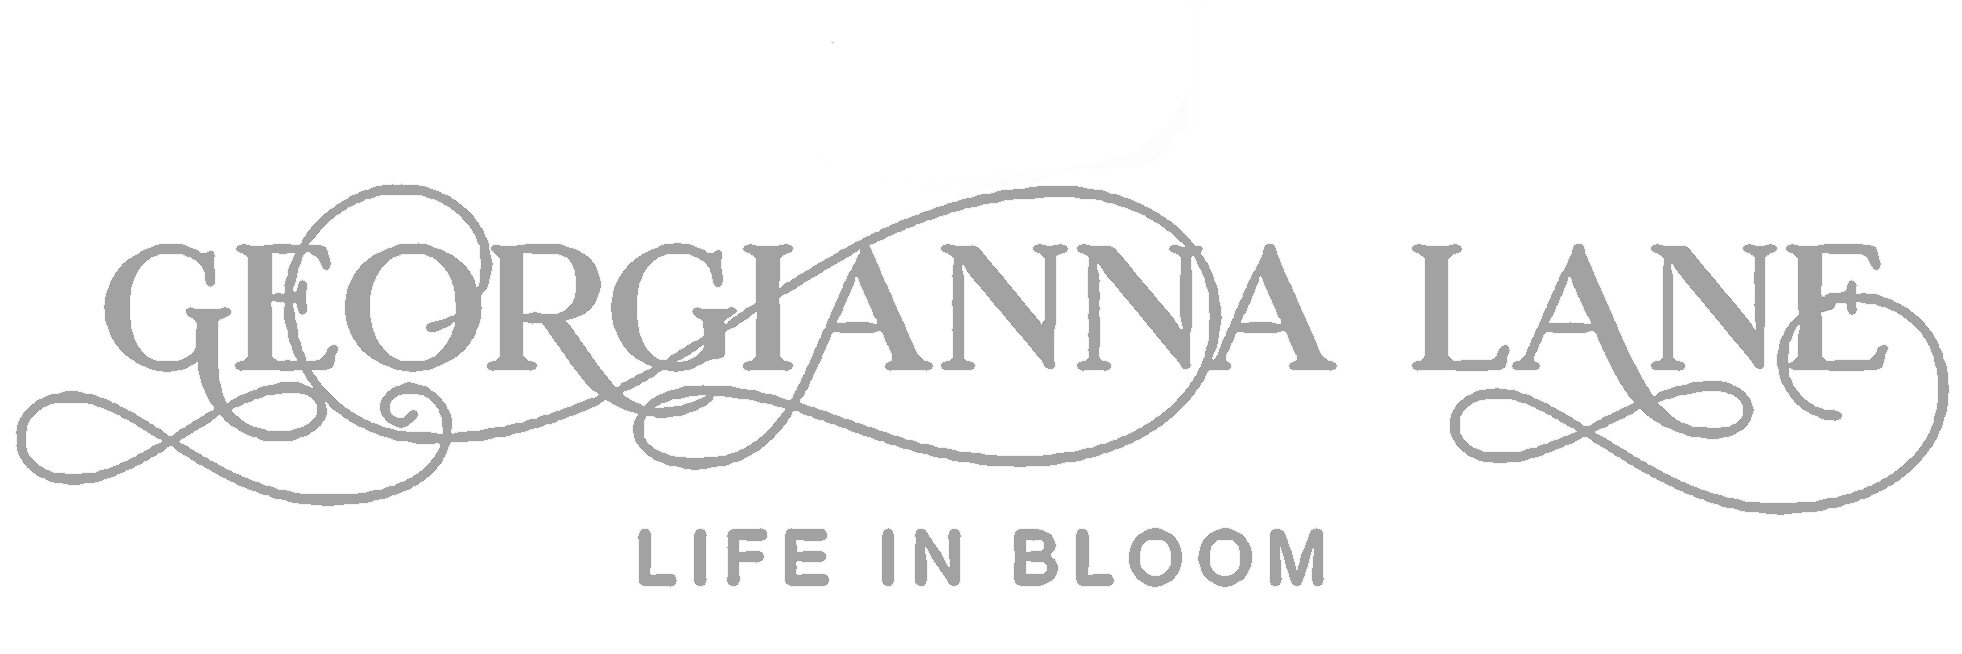 MGC Georgianna logo.jpg